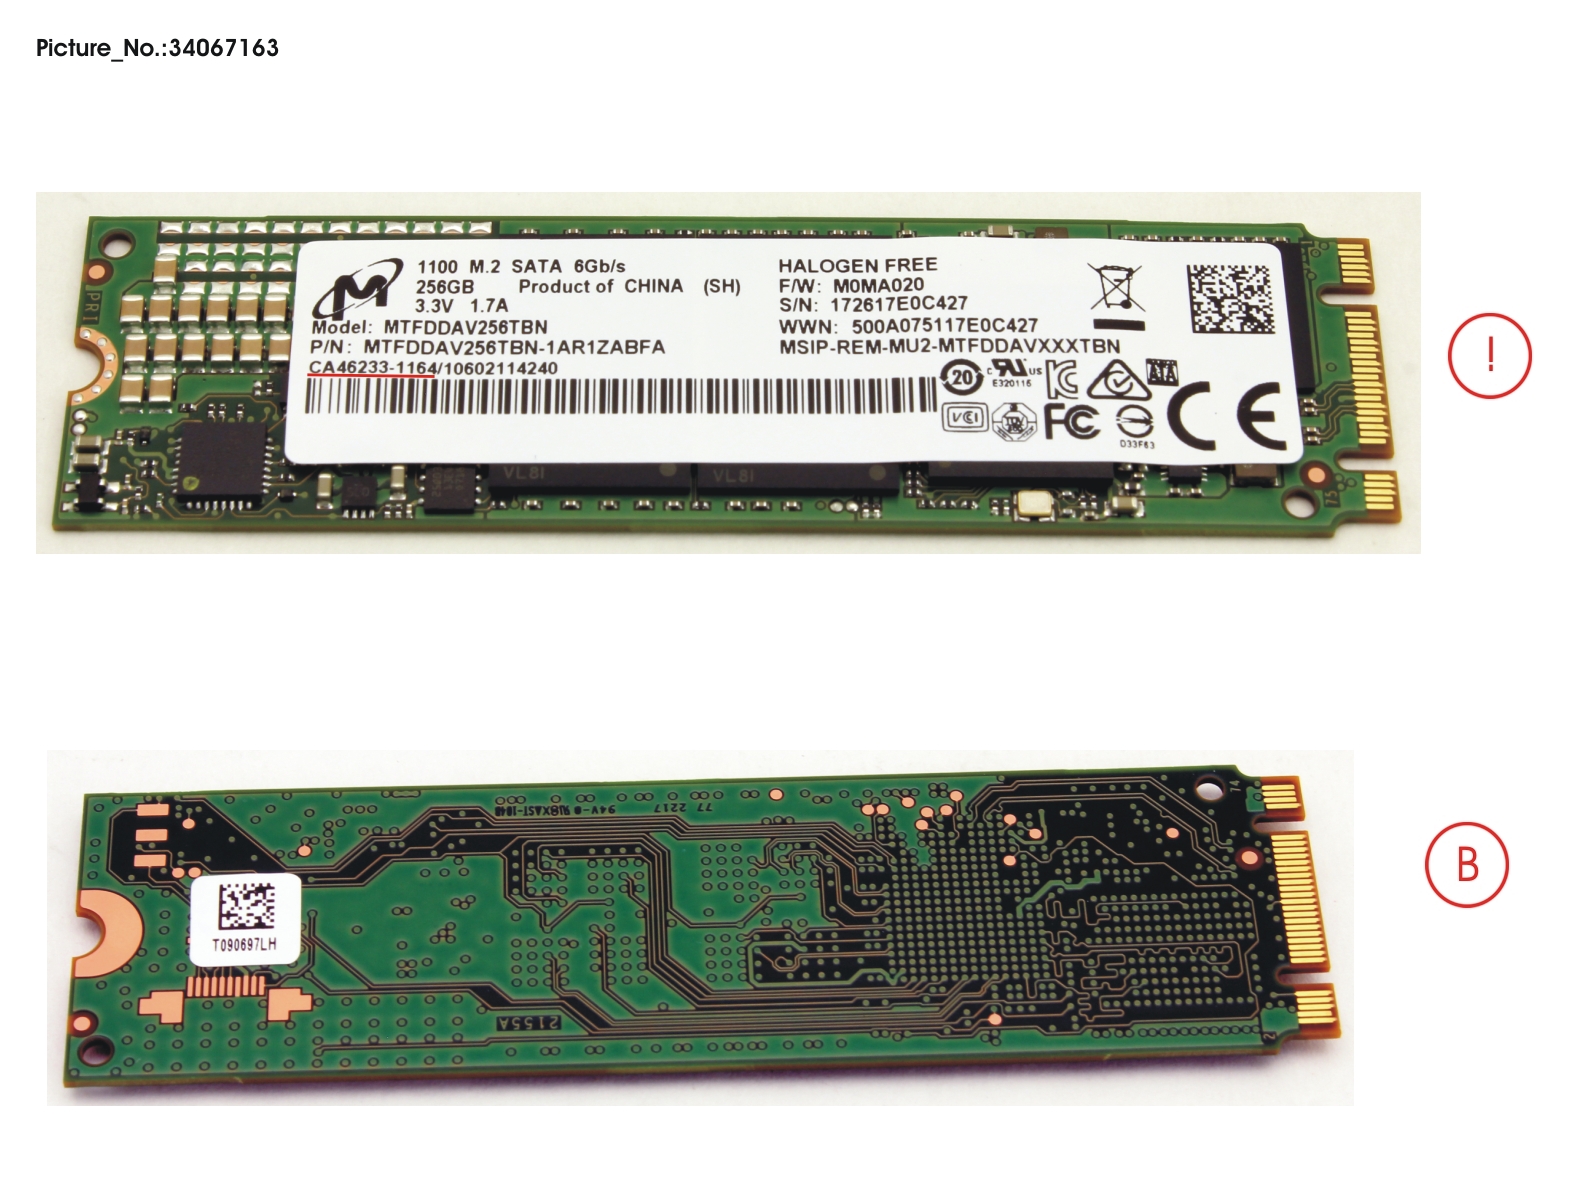 SSD S3 M.2 2280 MOI 1100 256GB